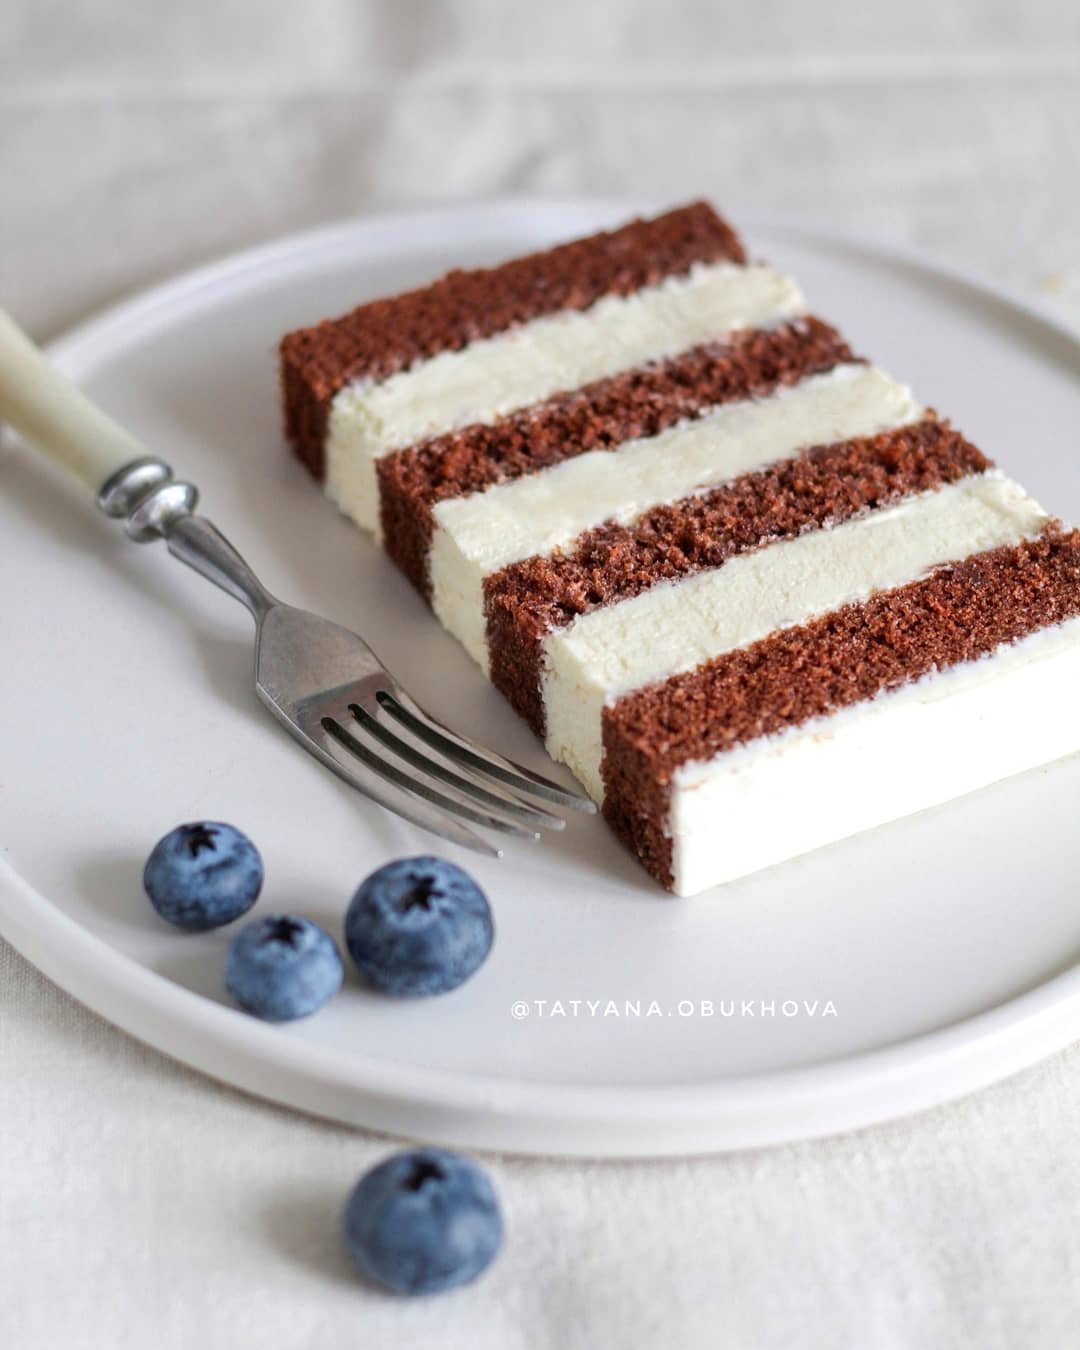 Delicate chocolate chiffon cake with white chocolate cream cheese